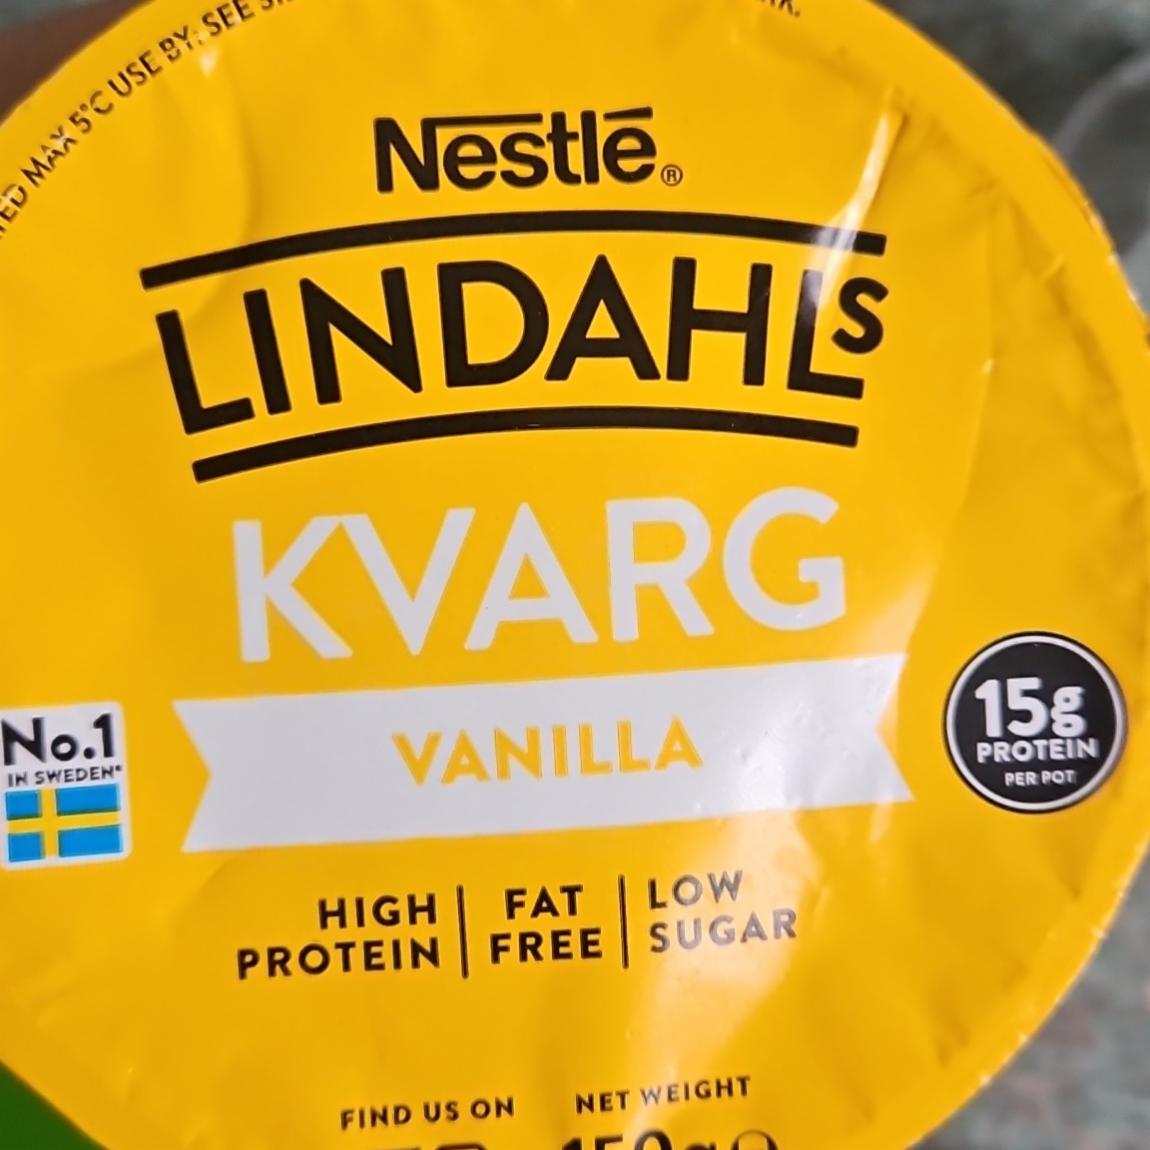 Zdjęcia - Lindahls Kvarg Vanilla Nestlé